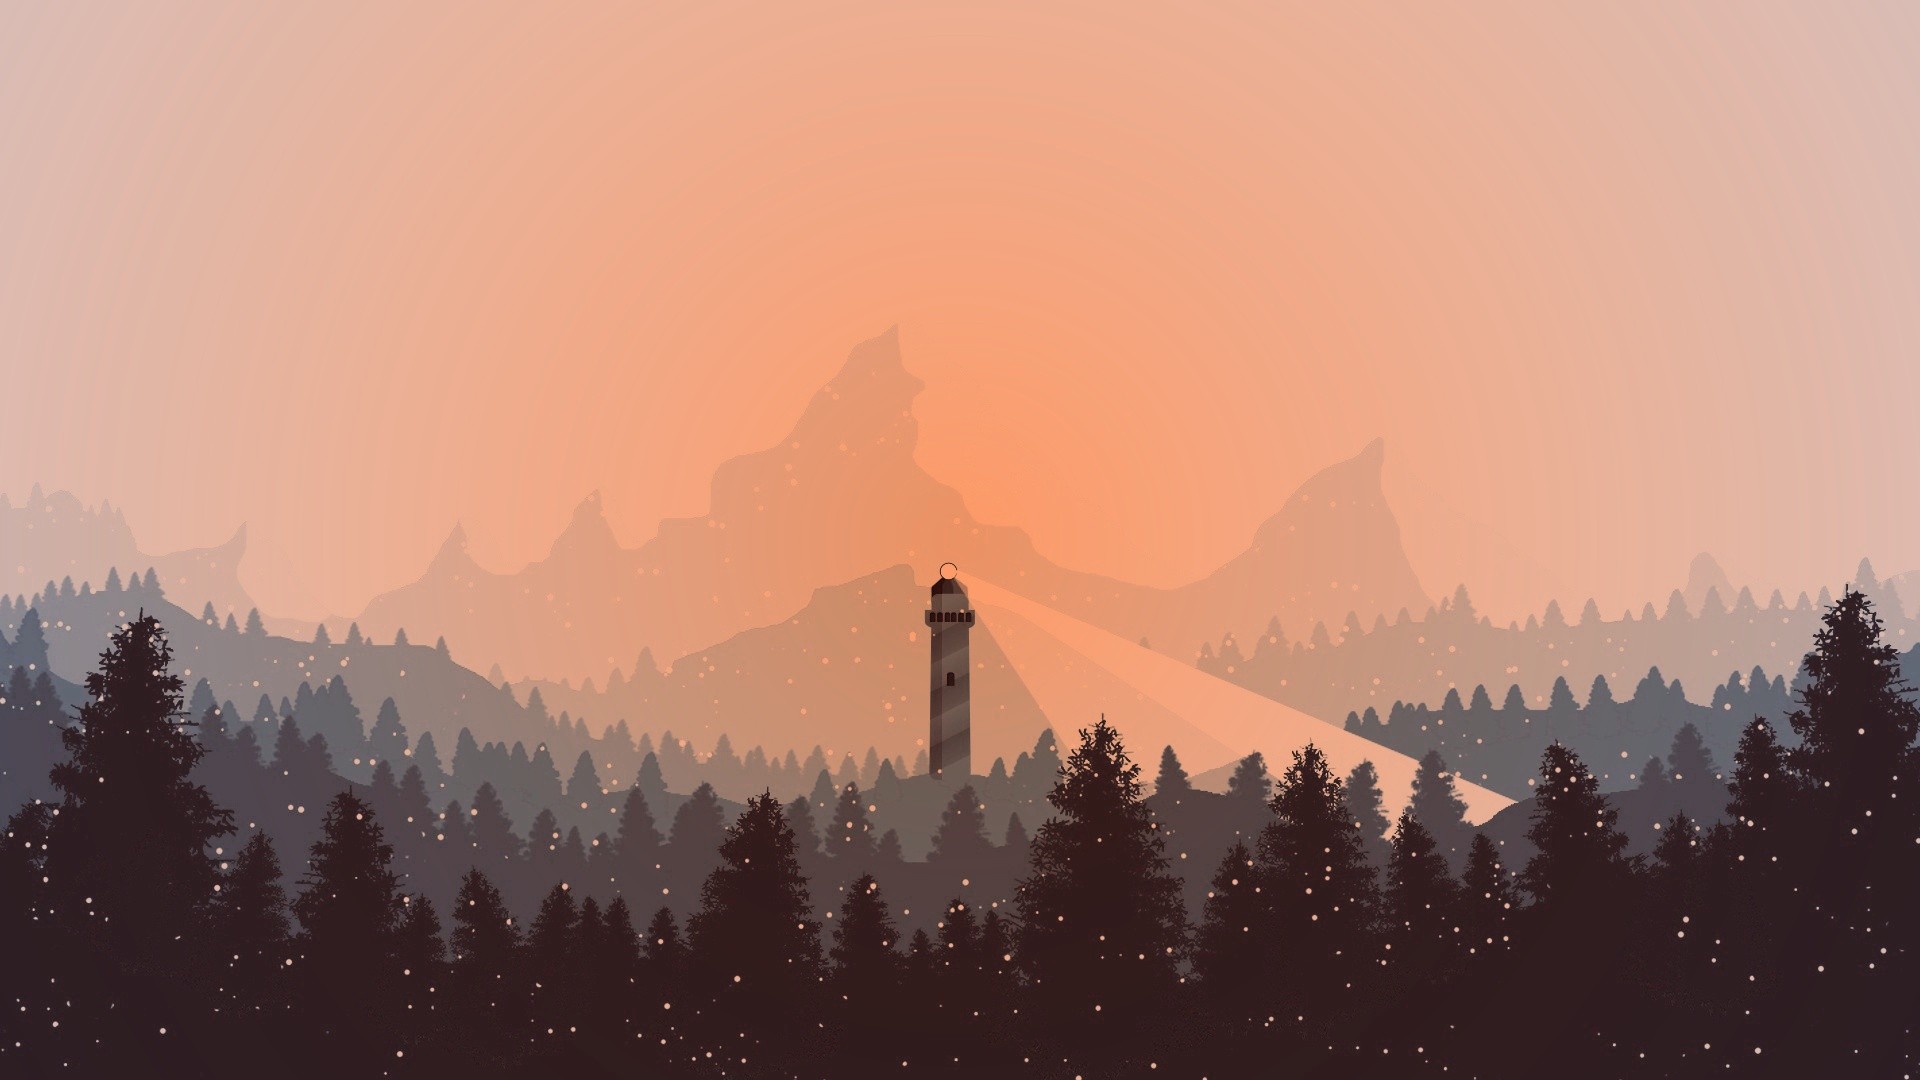 Wallpaper Snow Lighthouse Orange Winter Digital Art